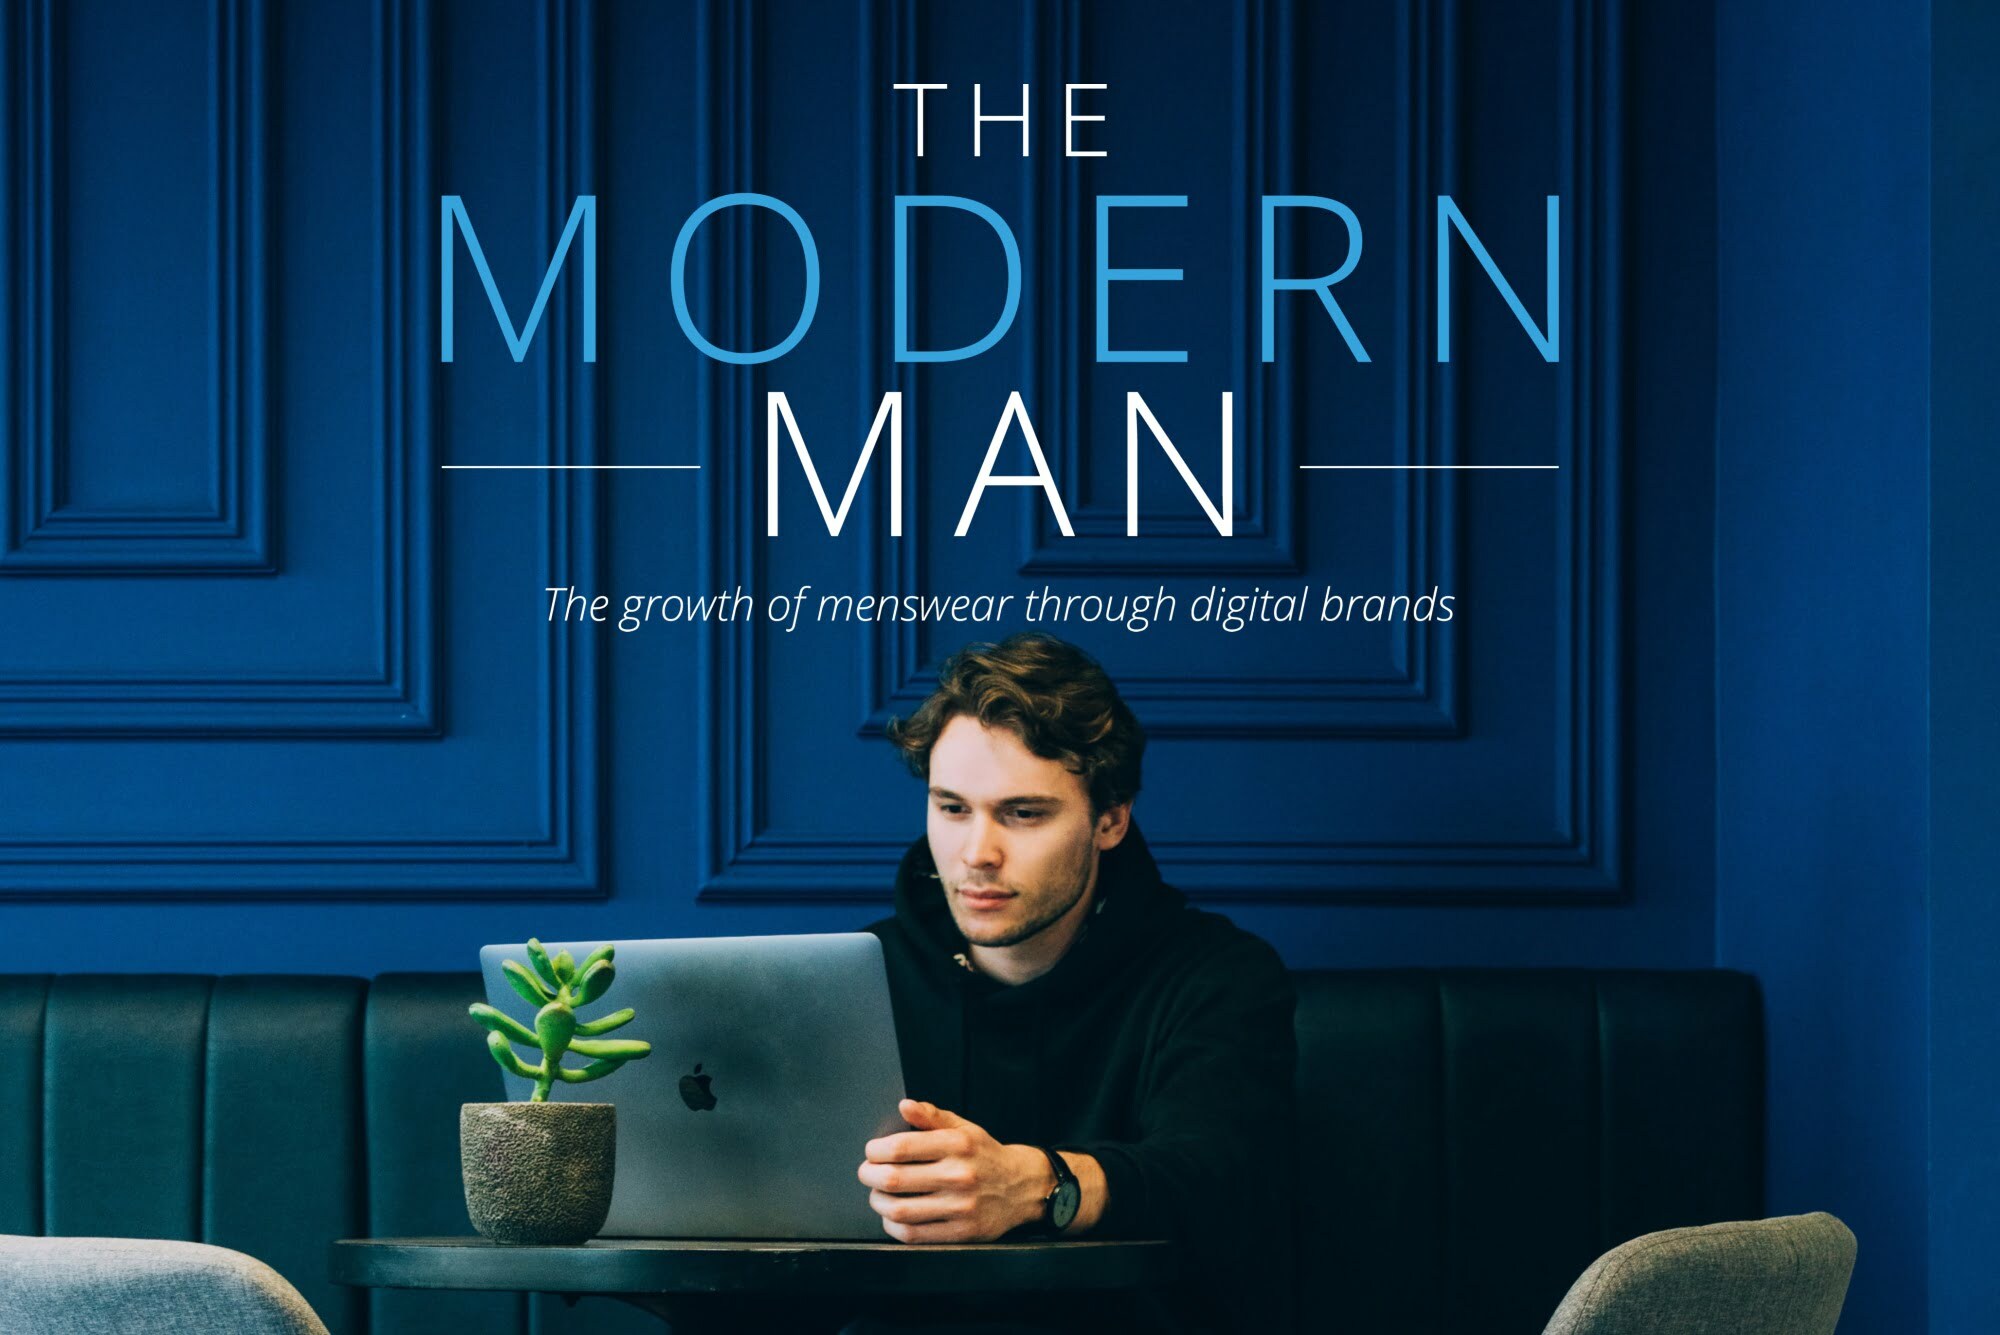 The Modern Man – The growth of menswear through digital brands